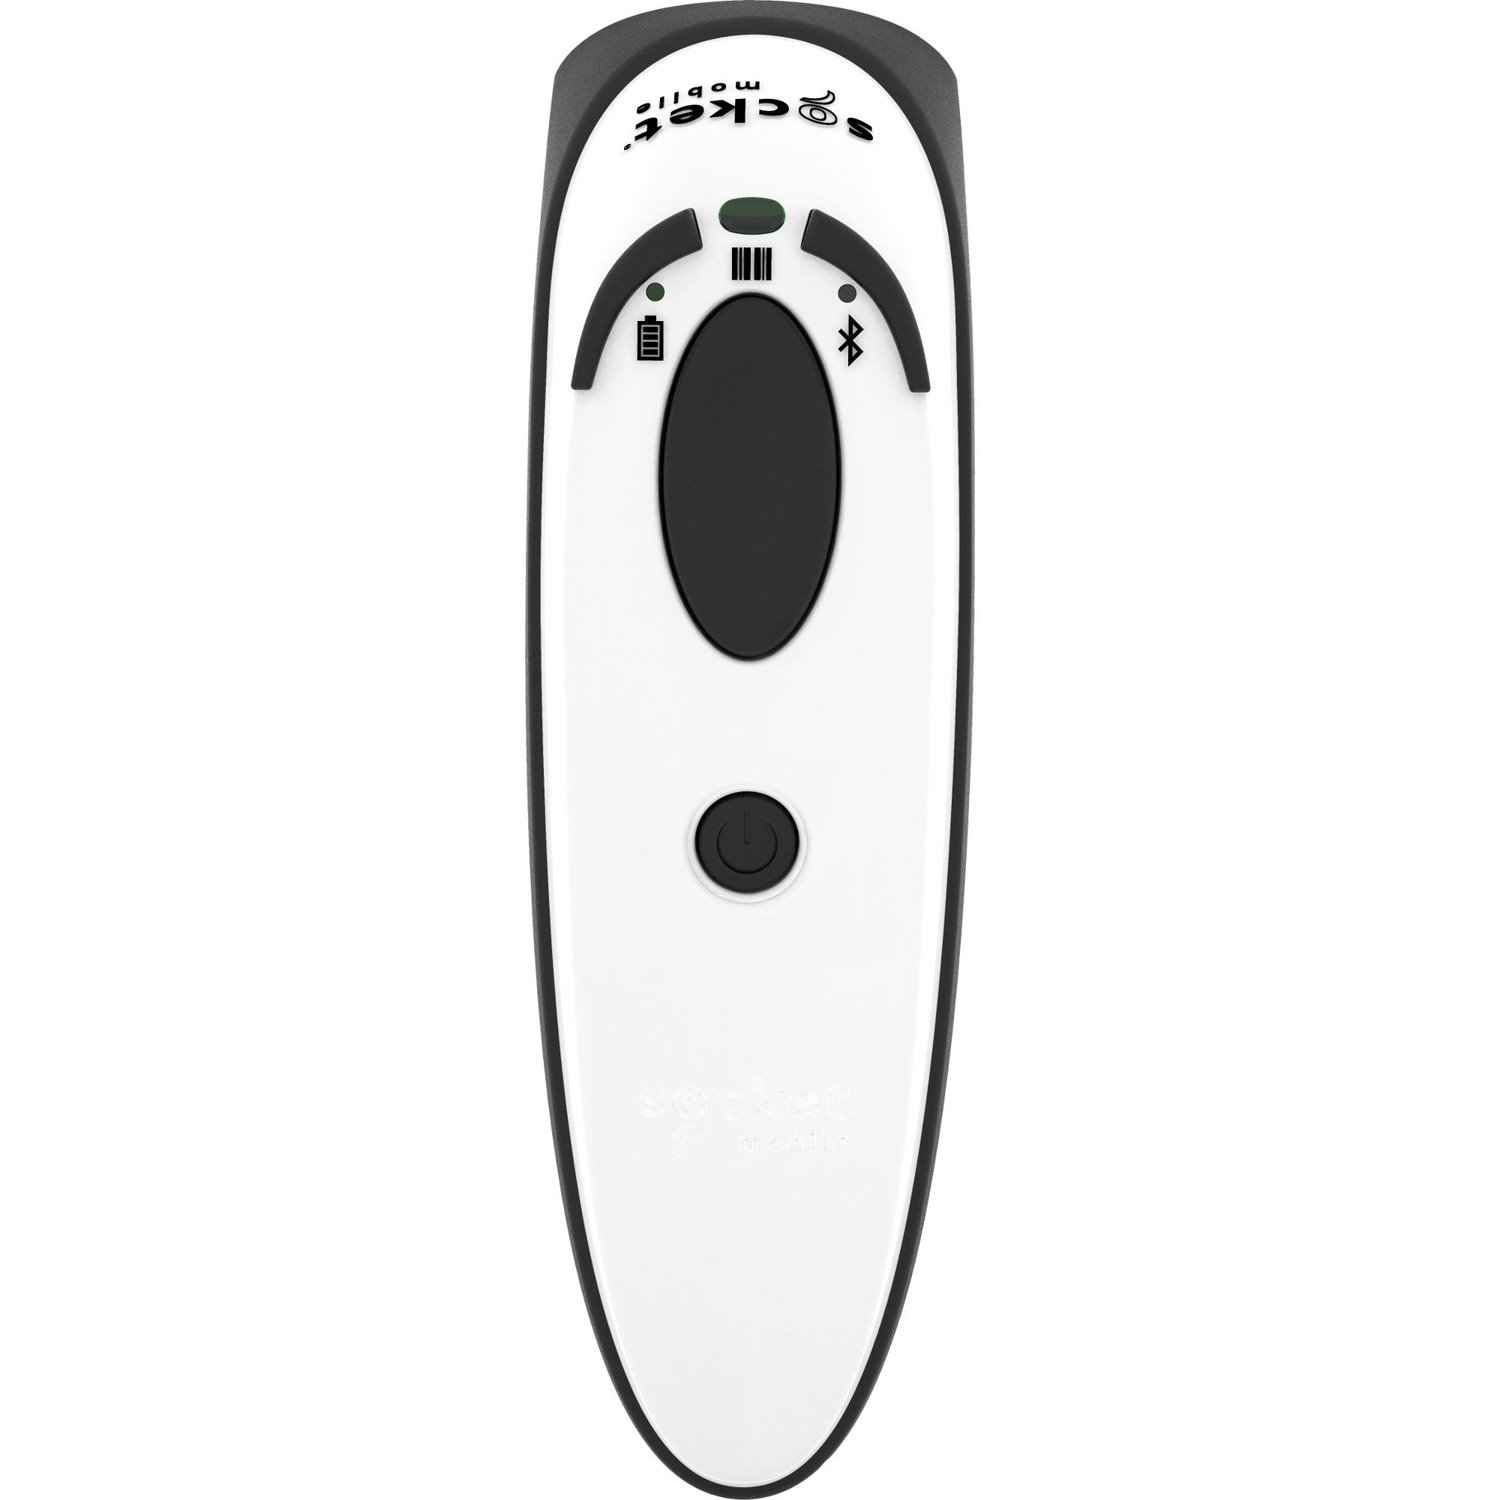 Socket Mobile DuraScan D760 Handheld Barcode Scanner - Wireless Connectivity - White